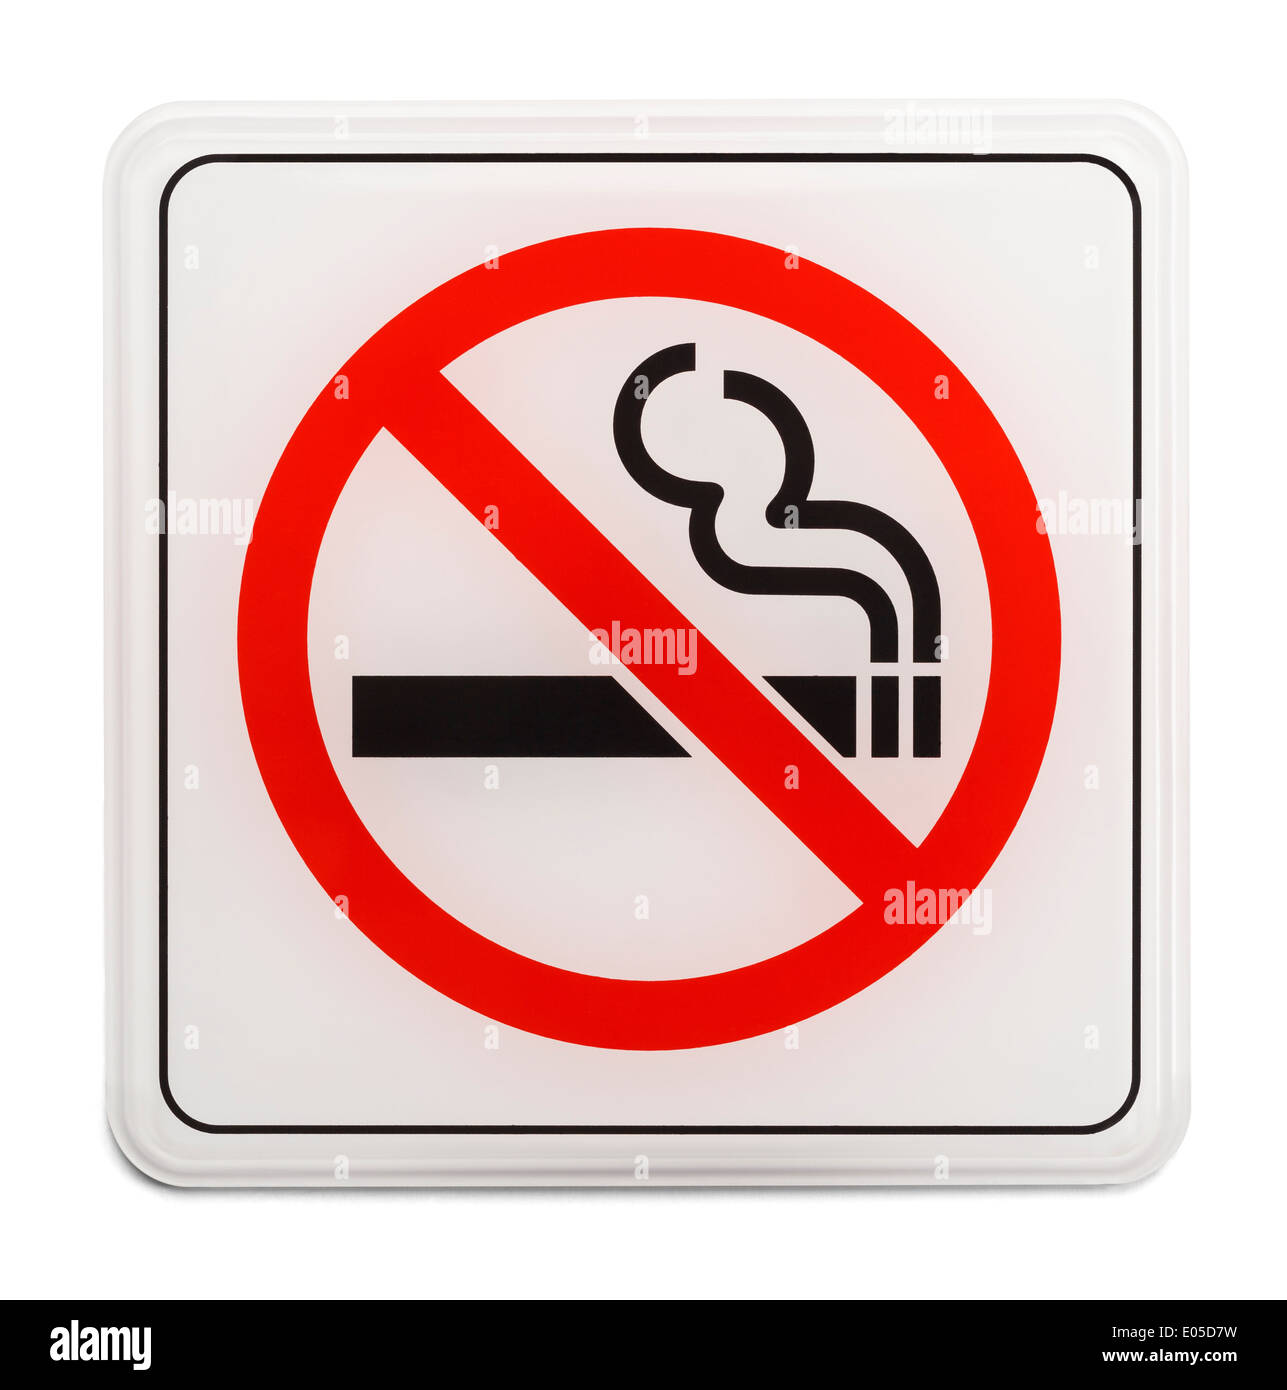 Prohibido fumar fotografías e imágenes de alta resolución - Alamy